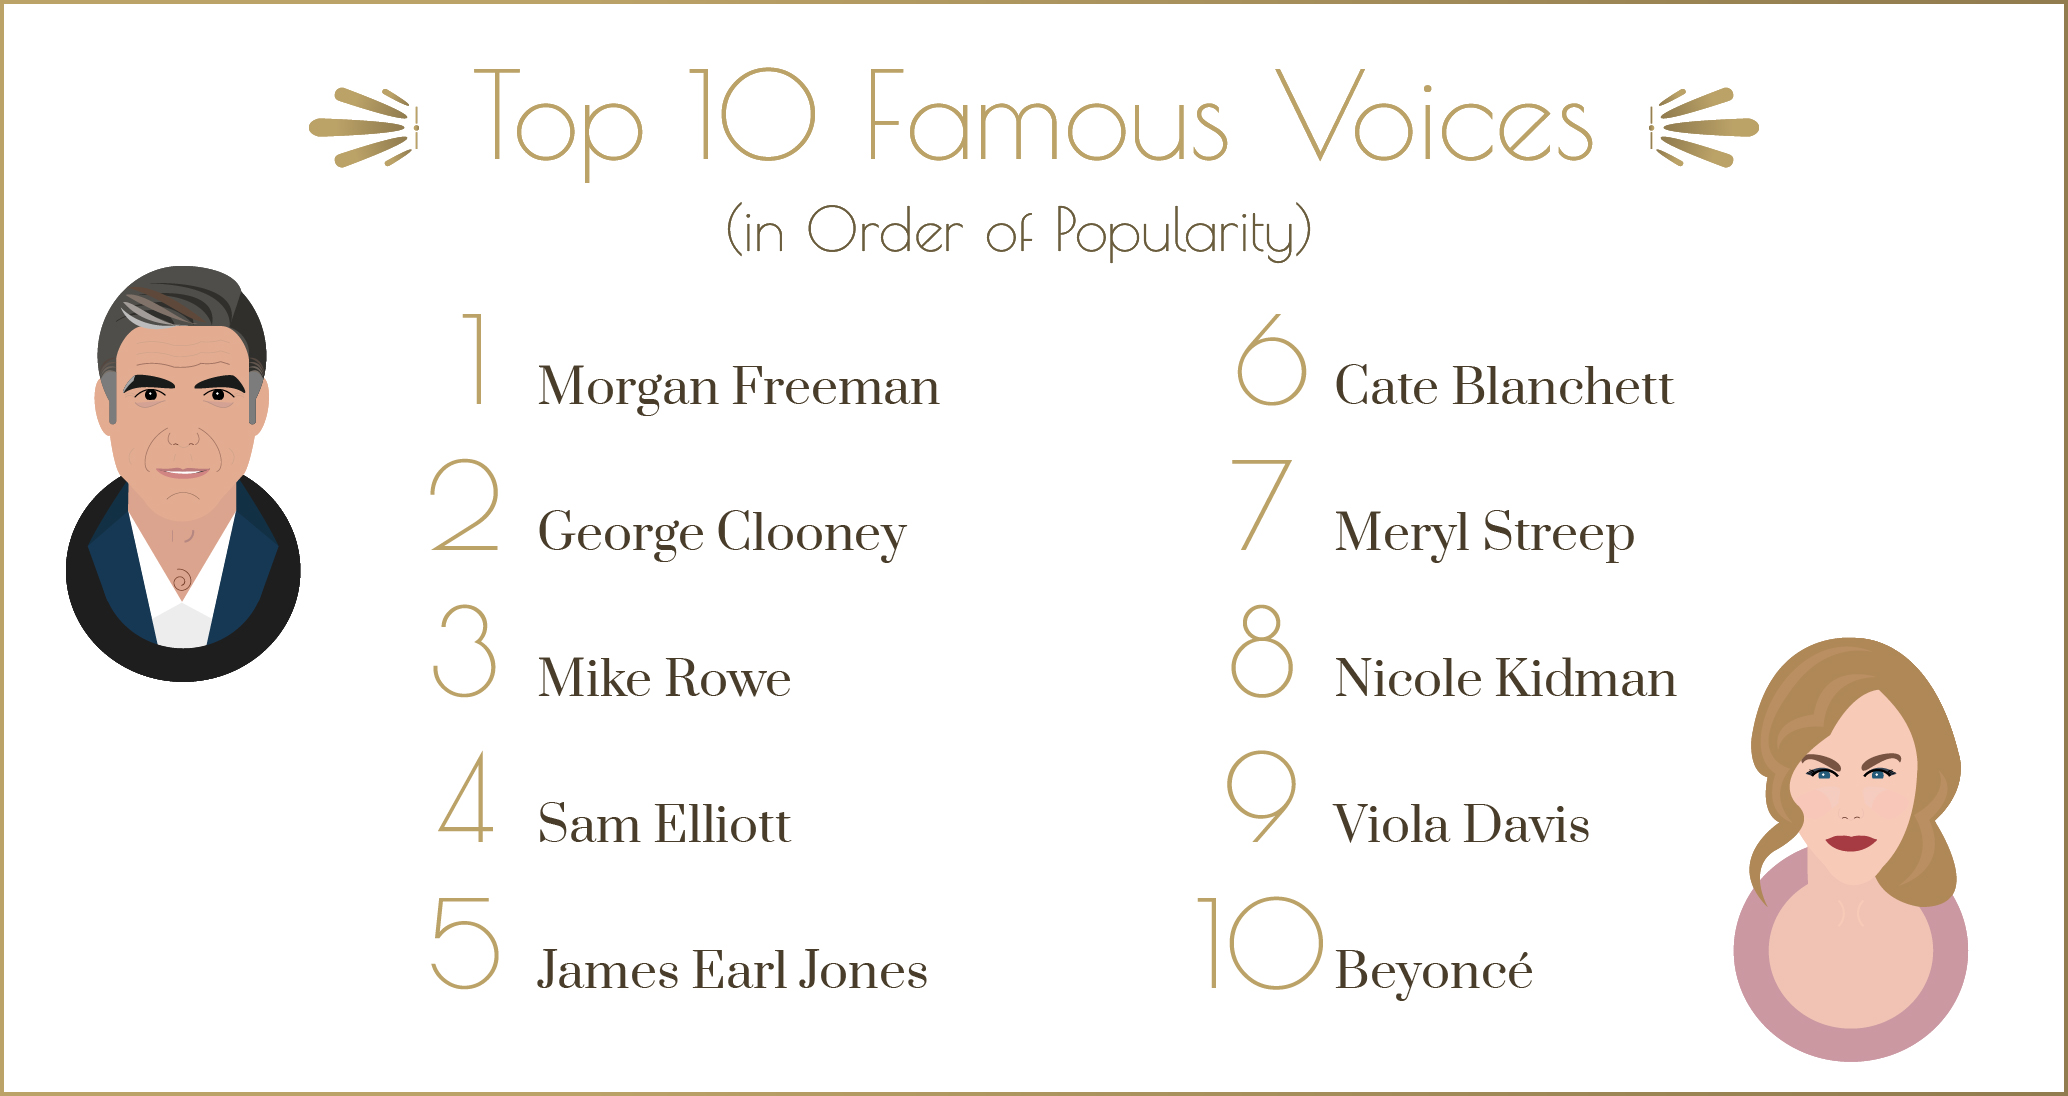 Top 10 Famous voices including